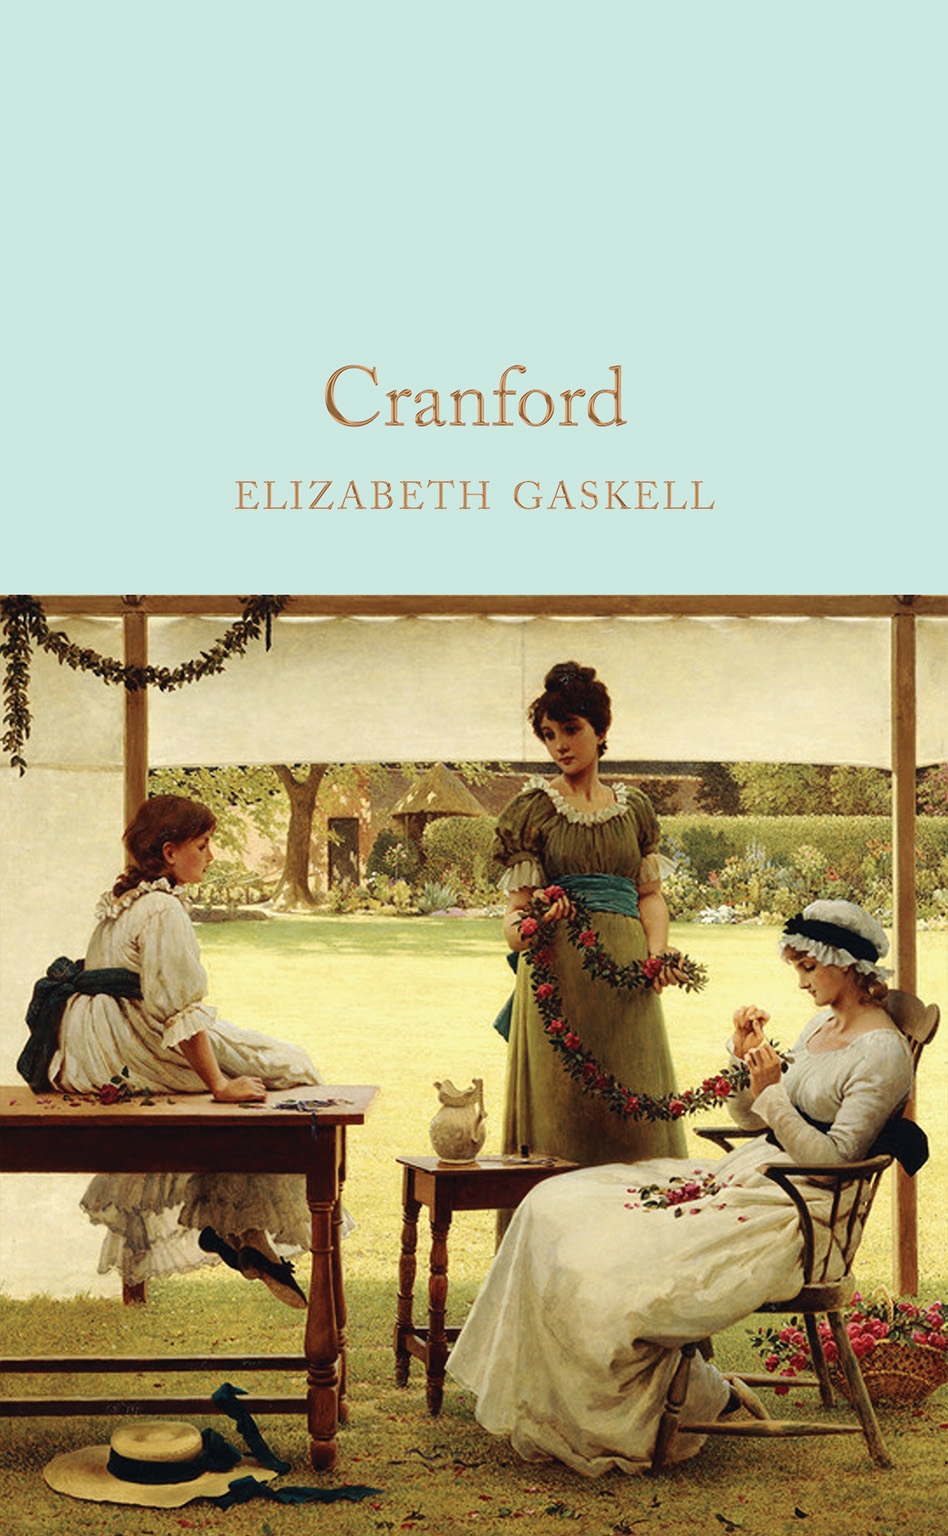 Book “Cranford” by Elizabeth Gaskell — May 8, 2018